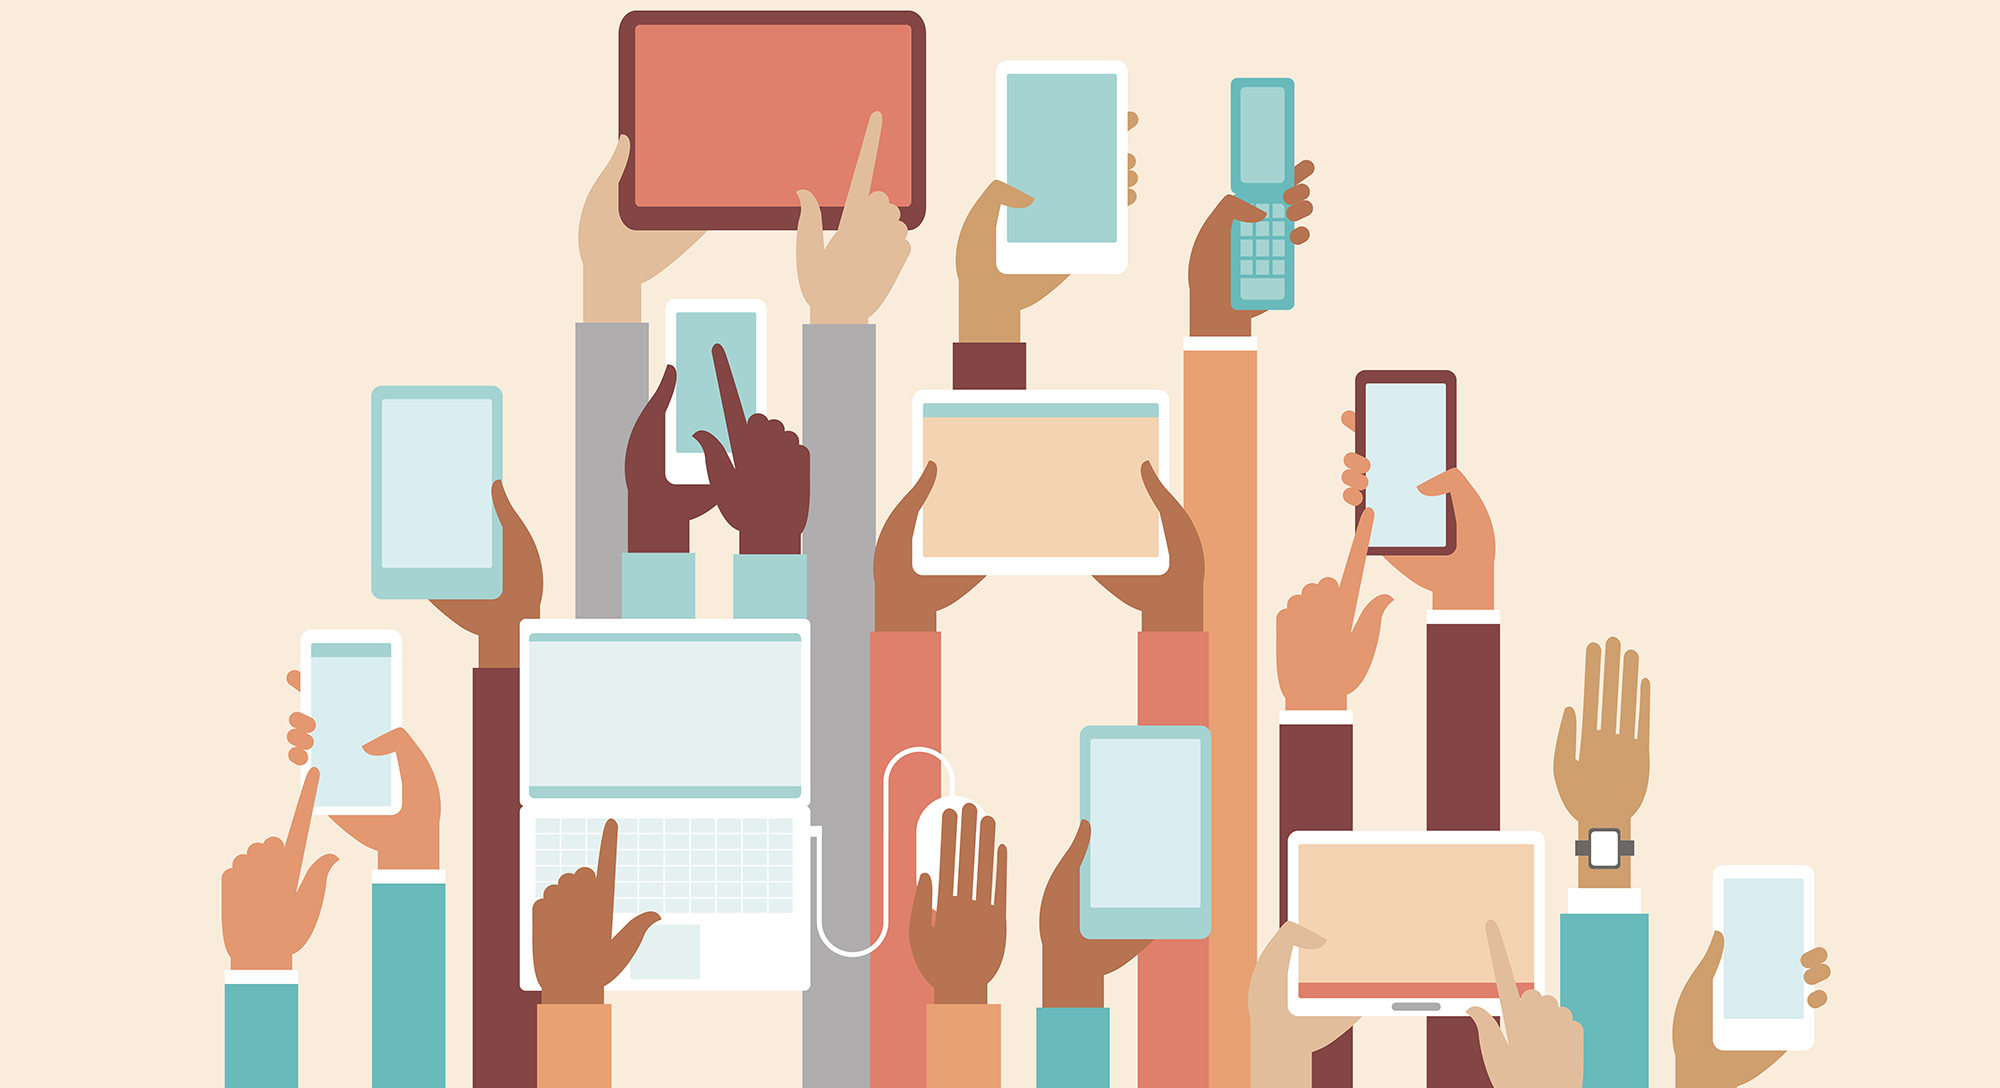 Illustration of hands holding up multiple portable digital devices